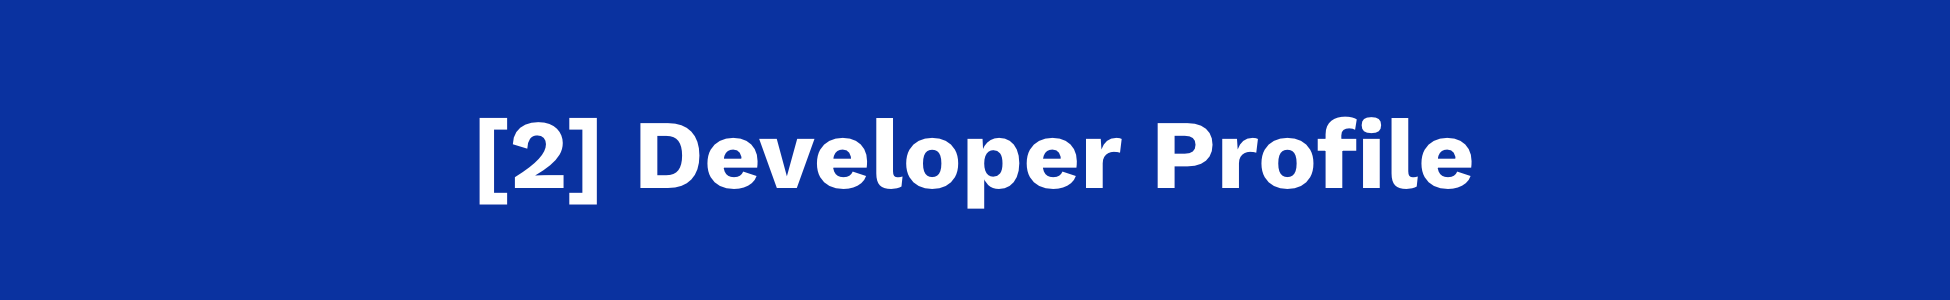 Developer Profile Header